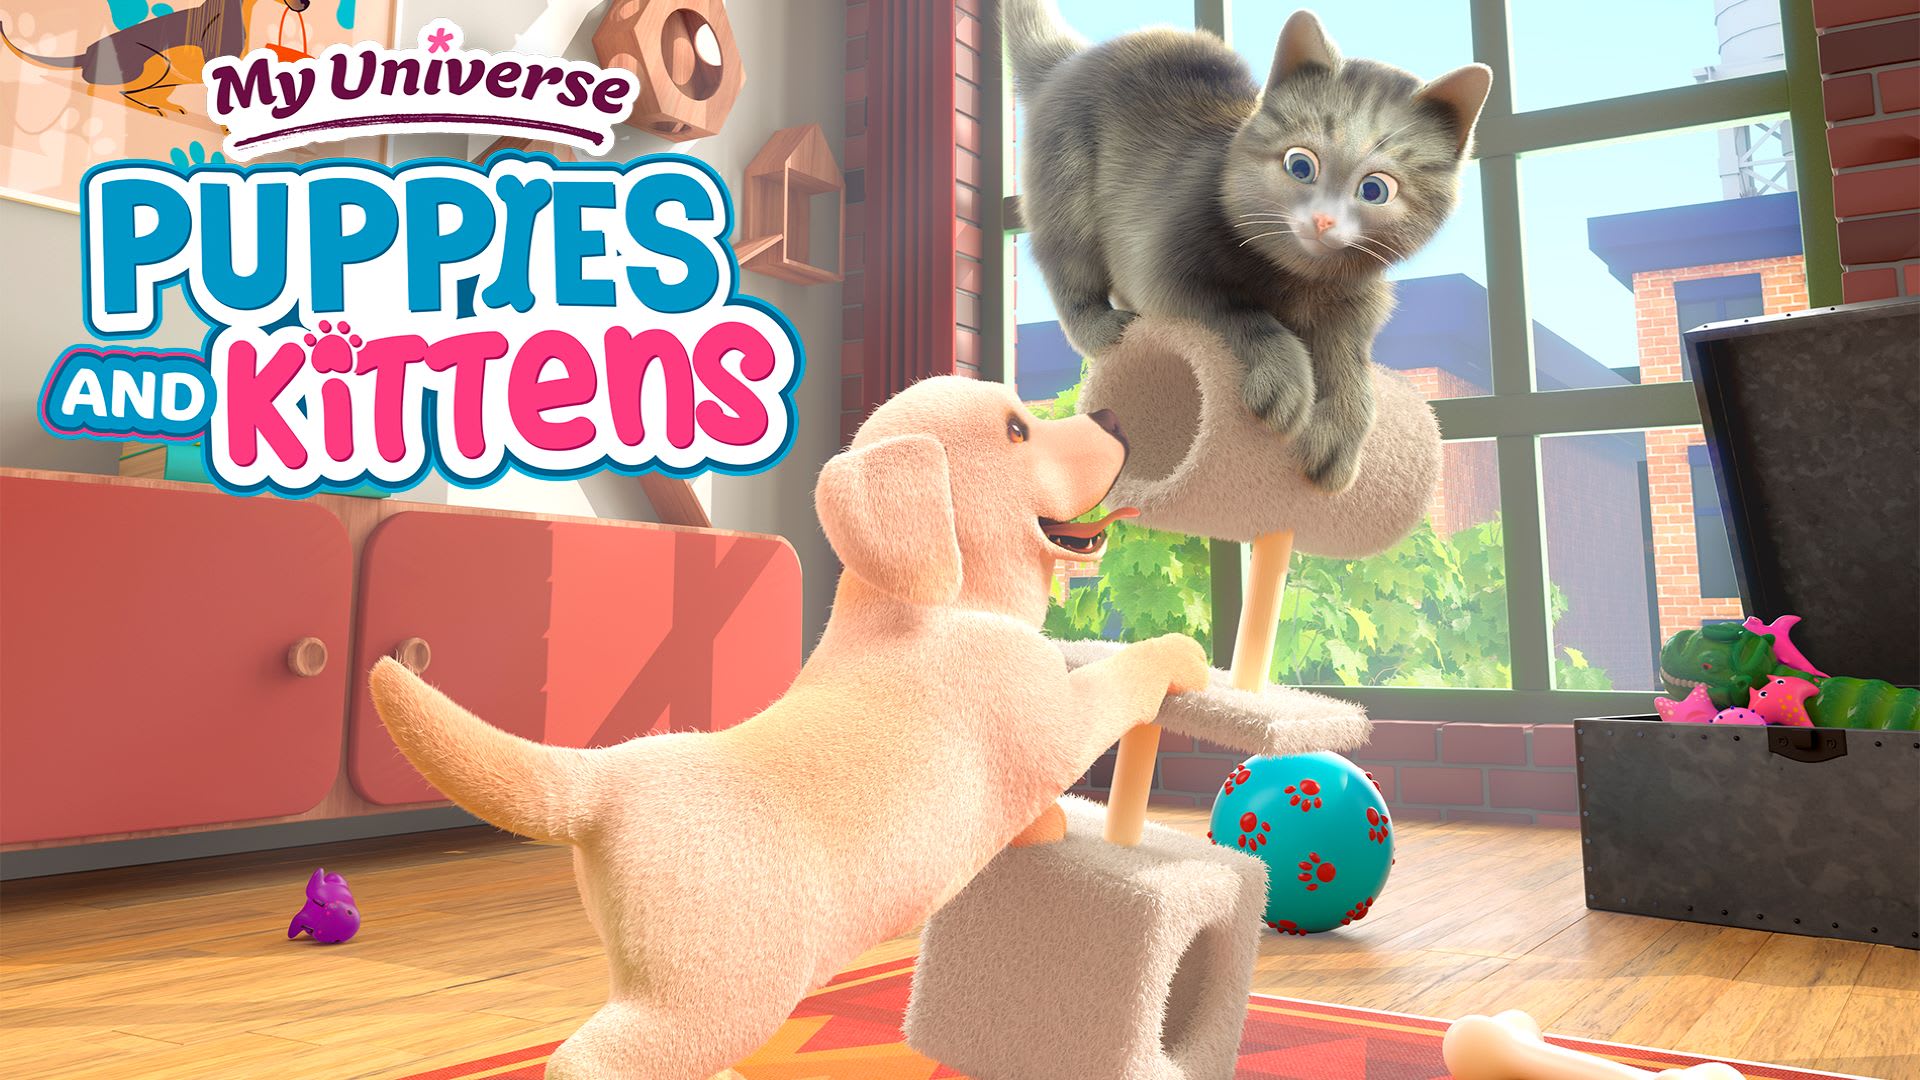 My Universe - Puppies & Kittens